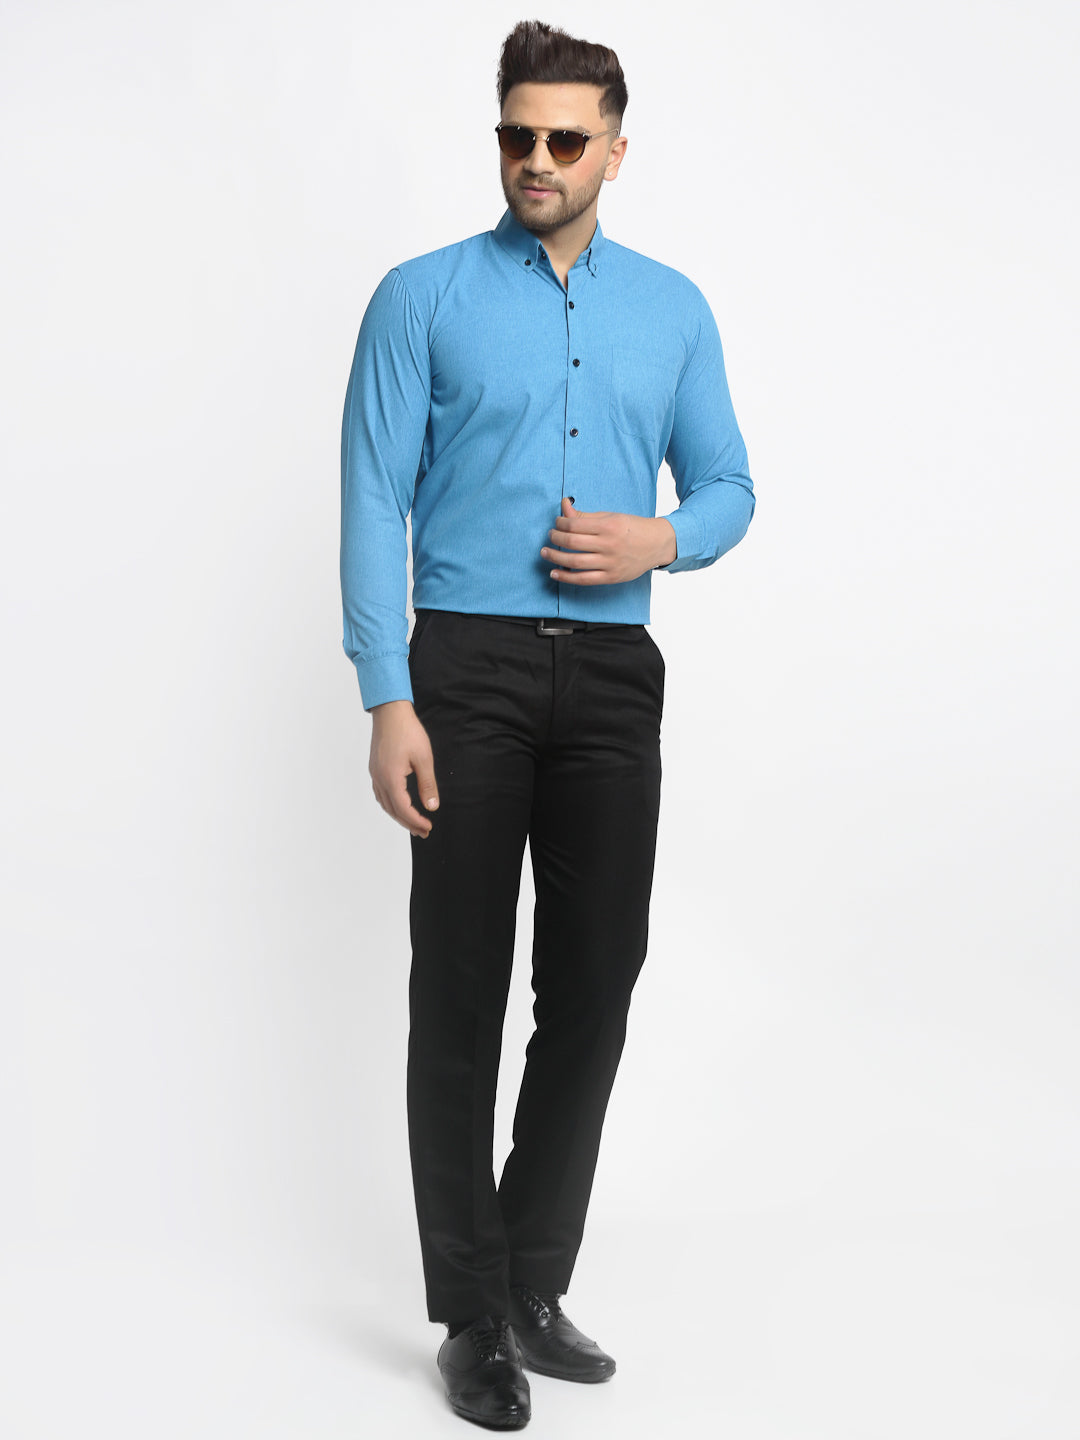 Men's Blue Cotton Solid Button Down Formal Shirts ( SF 734Sky ) - Jainish